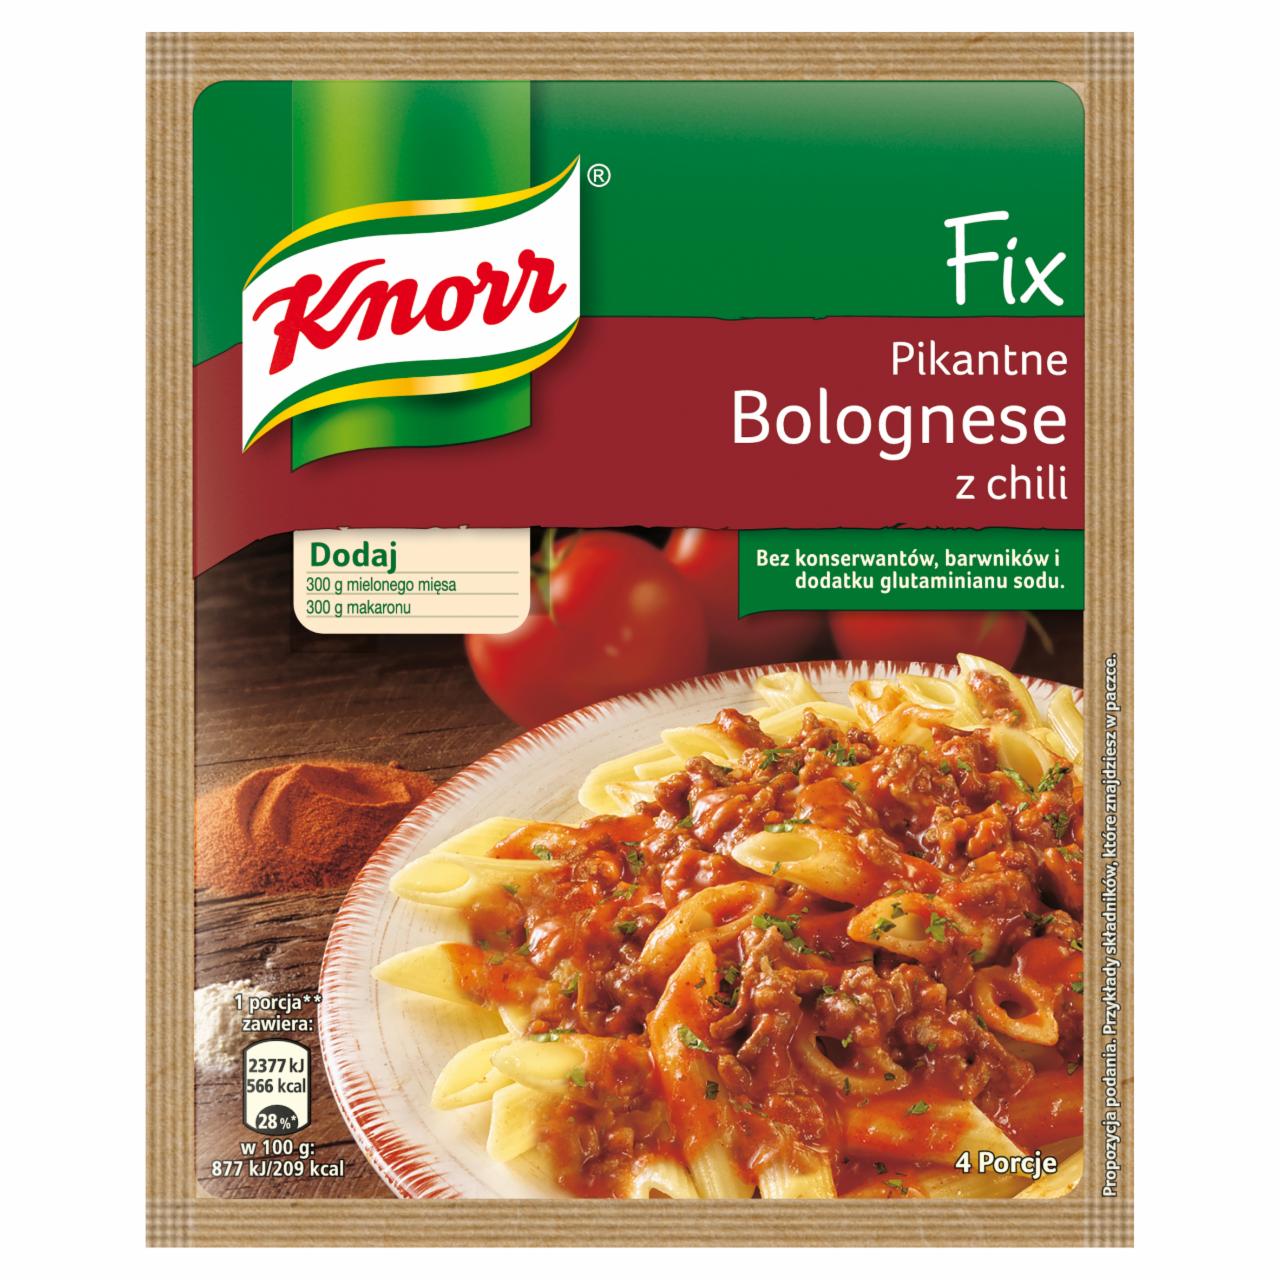 Zdjęcia - Knorr Fix pikantne bolognese z chili 46 g